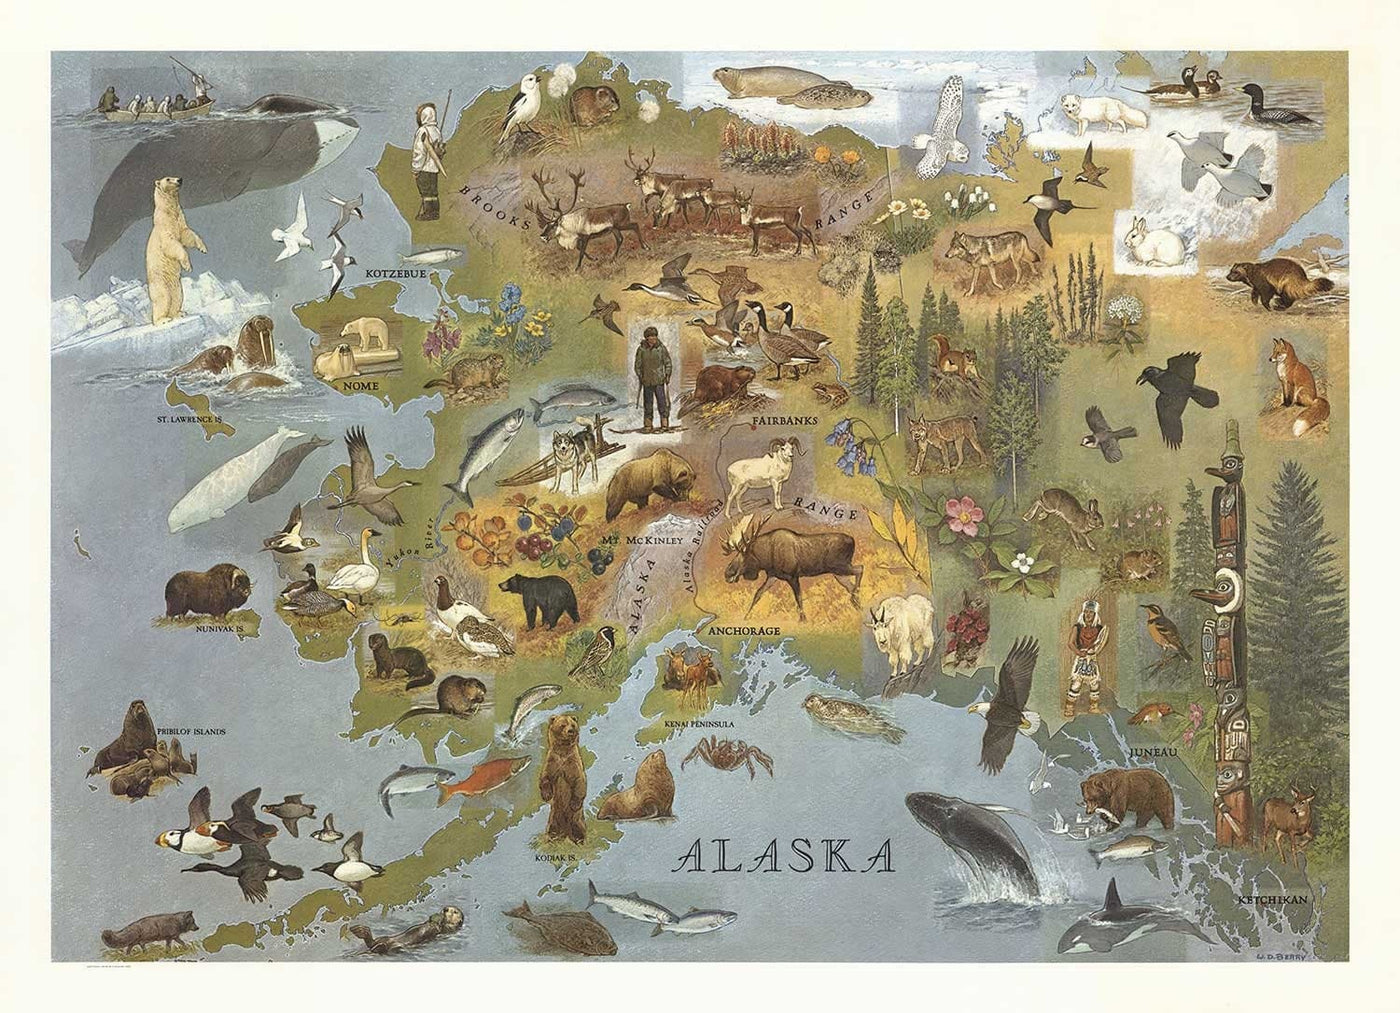 Ancienne carte de l'Alaska de WD Berry, 1967 - Eskimos, Inuits et Animaux - Anchorage, Yukon, Denali / McKinley